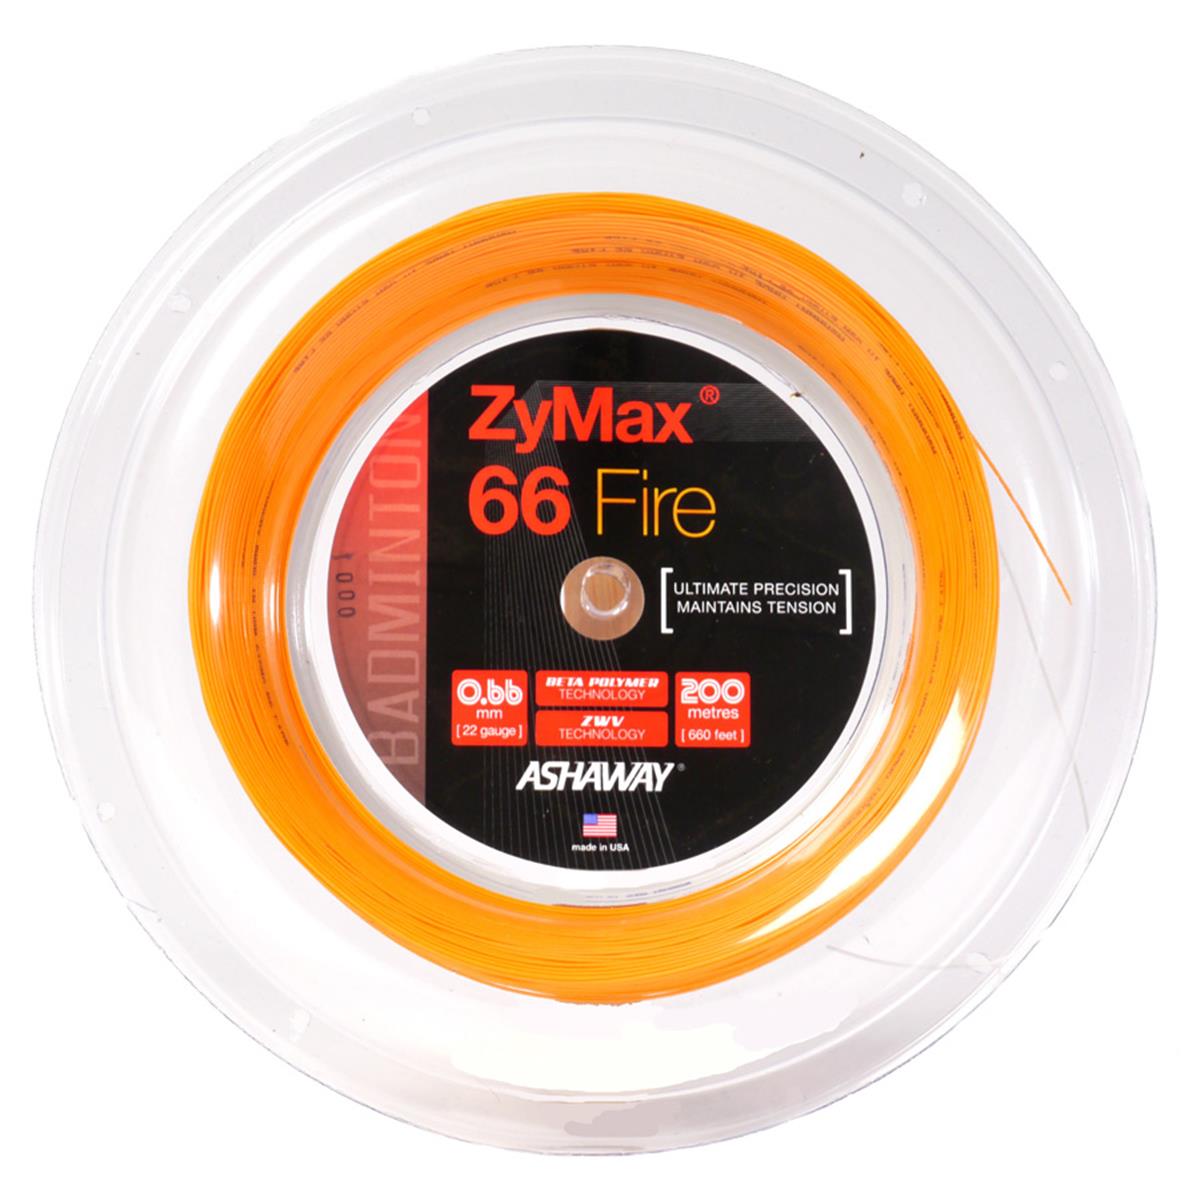 Ashaway Zymax 66 Fire Badminton String Orange - 0.66MM - 200m Reel